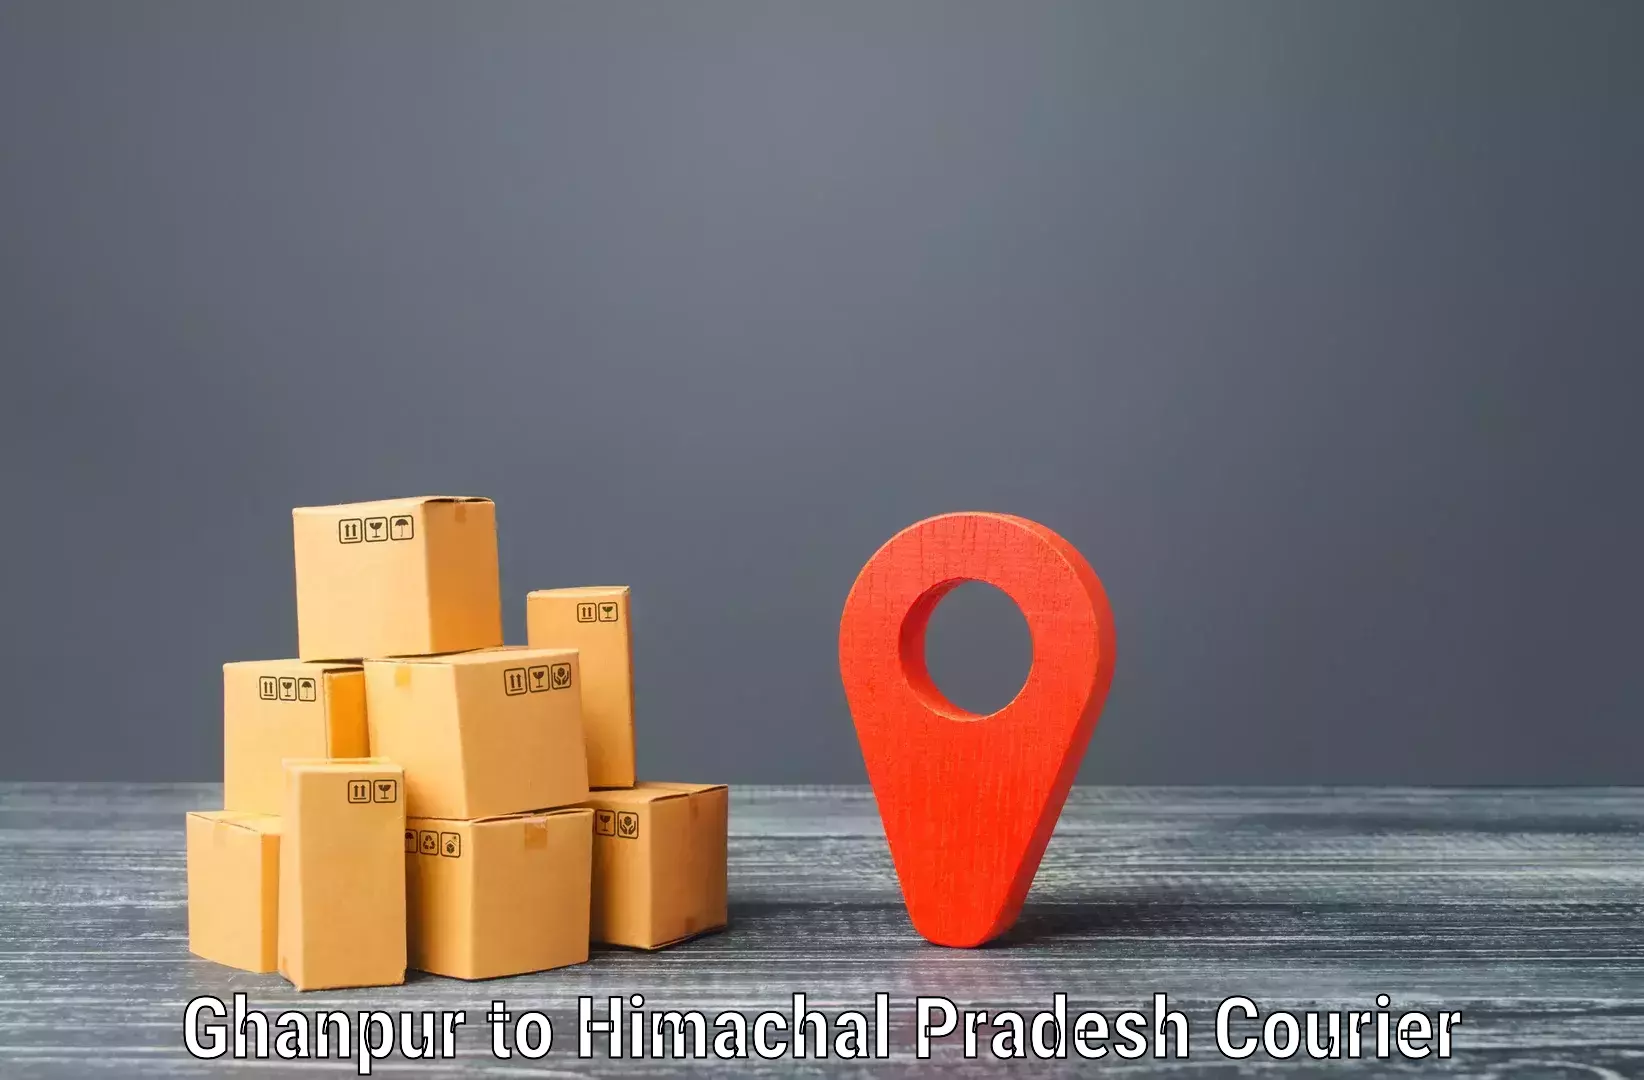 Advanced delivery network Ghanpur to Joginder Nagar